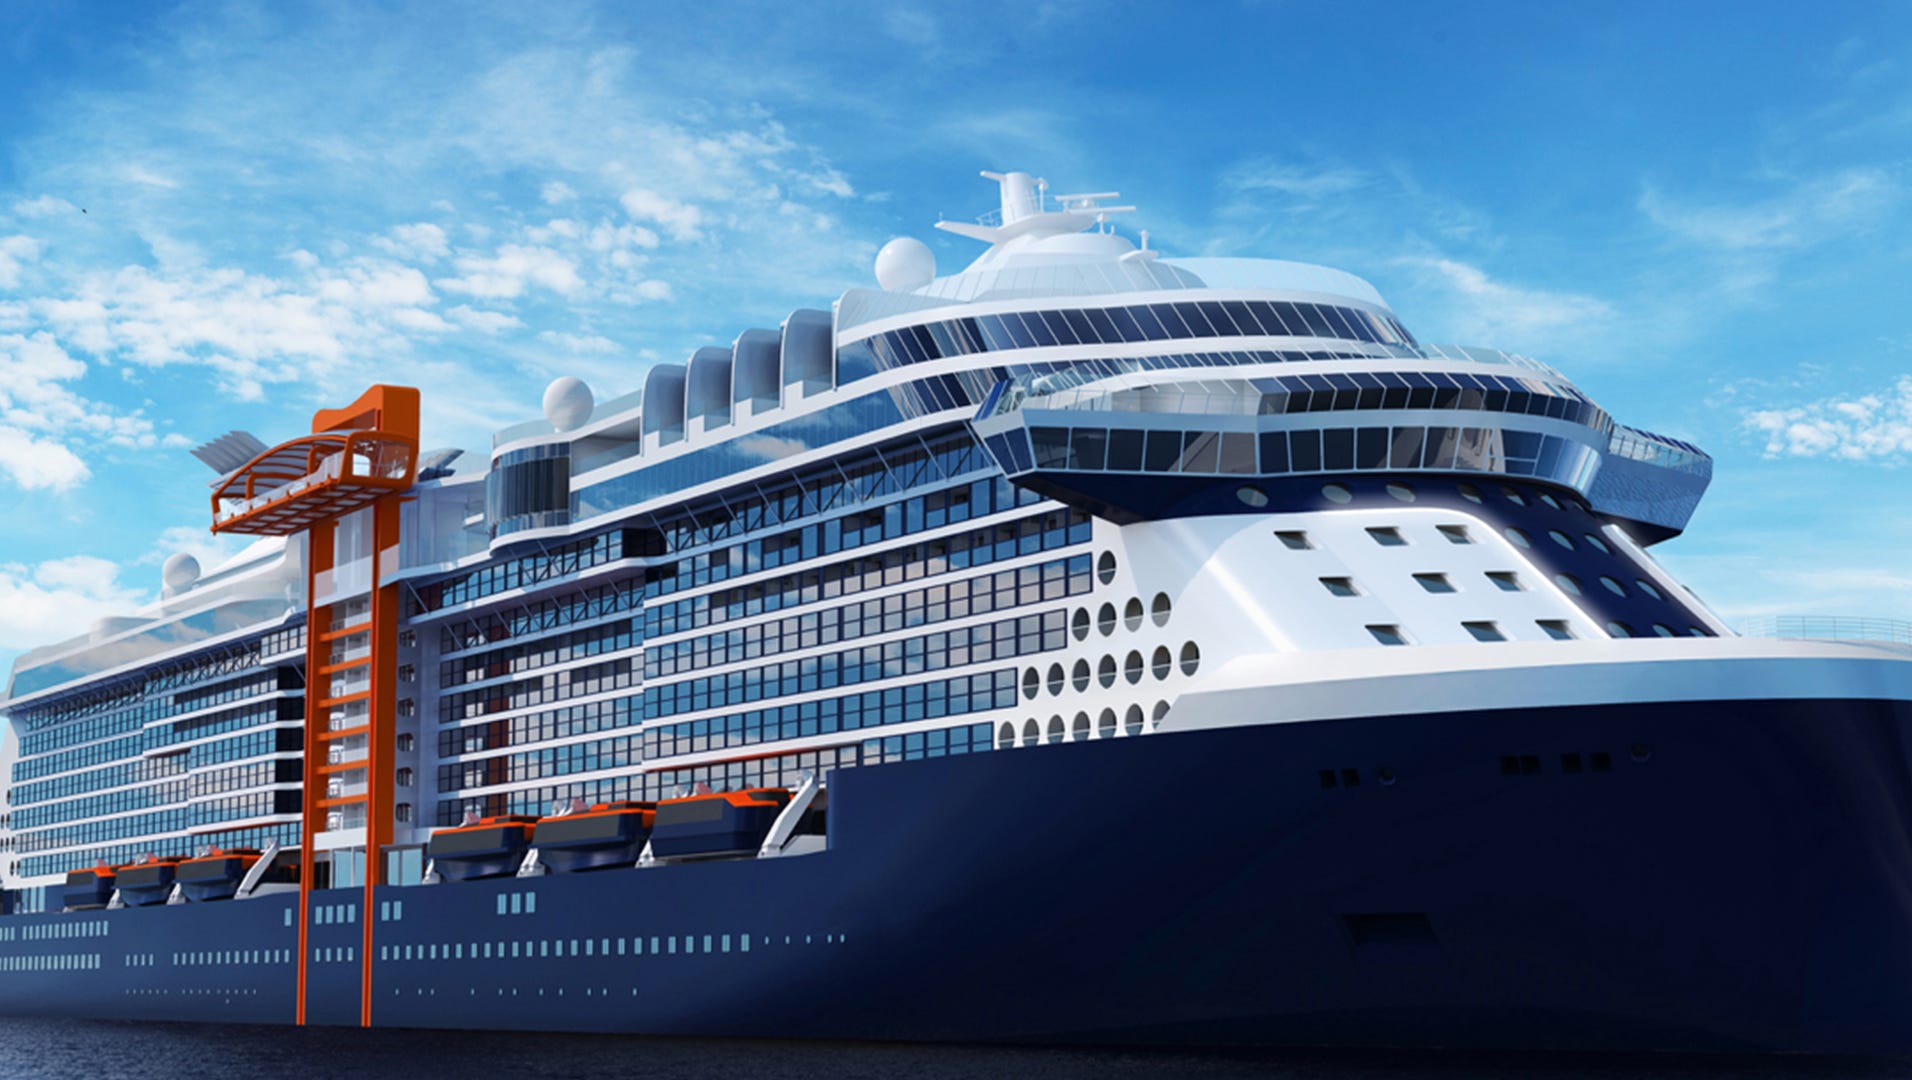 celebrity edge cruise ship model